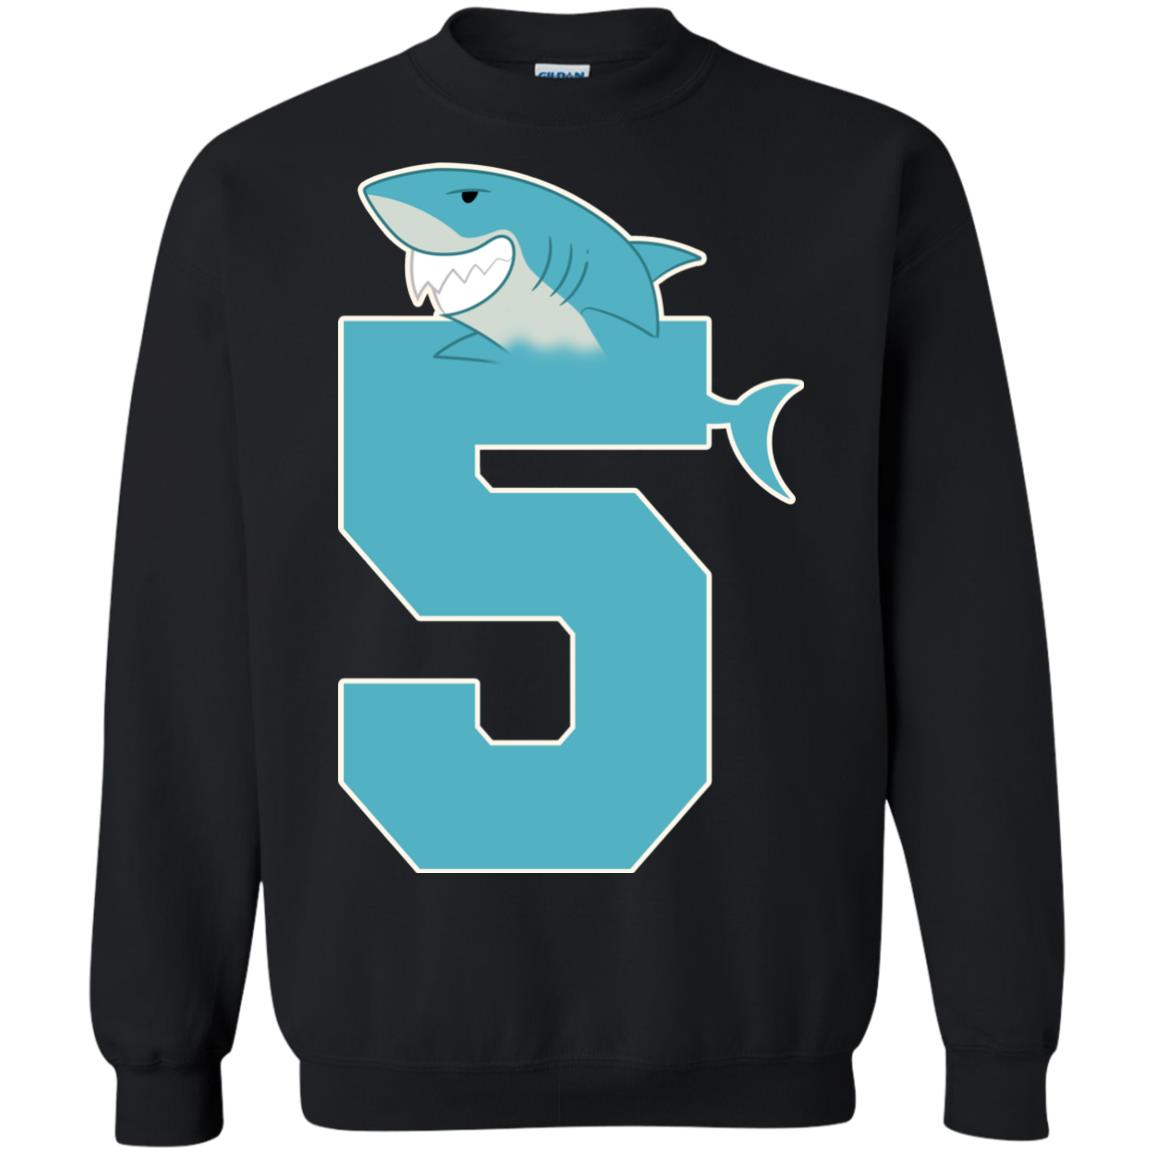 5th Birthday Shark Party ShirtG180 Gildan Crewneck Pullover Sweatshirt 8 oz.